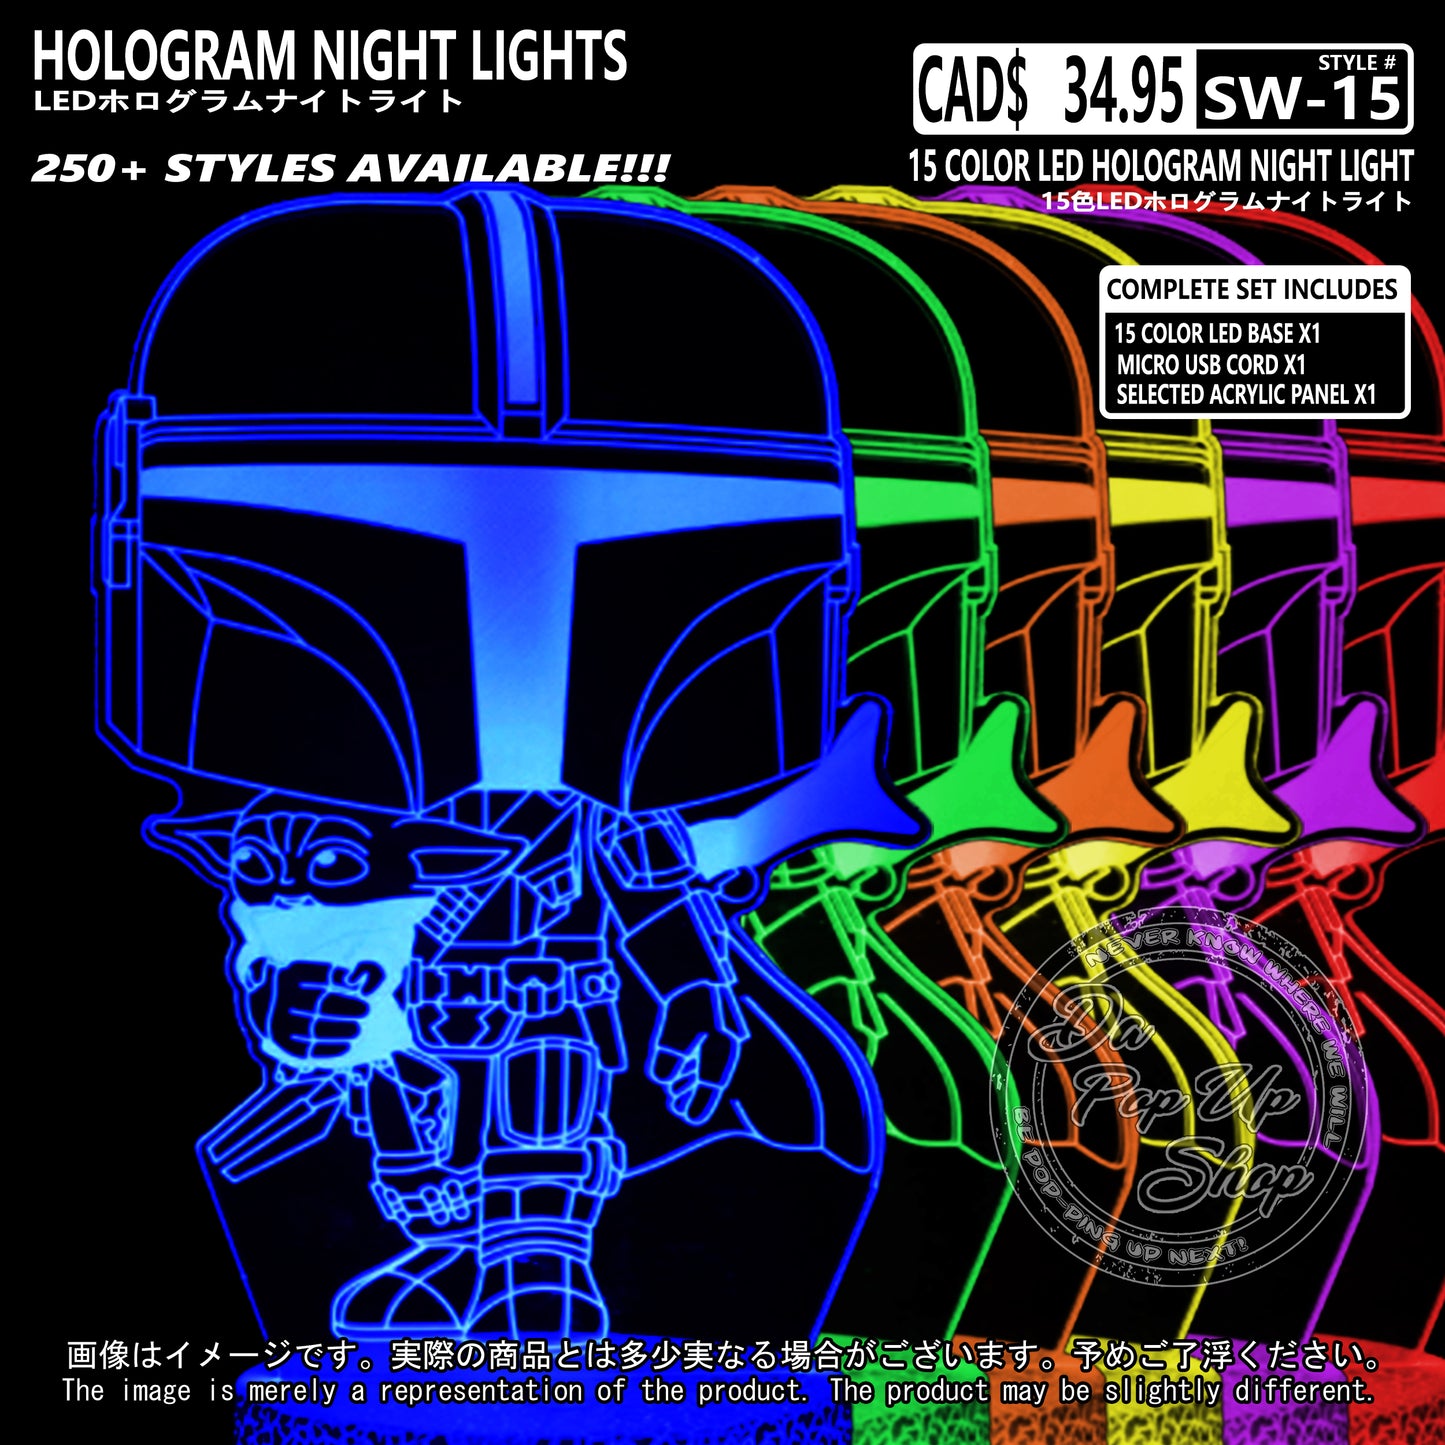 (SW-15) MANDALORIAN Star Wars Hologram LED Night Light